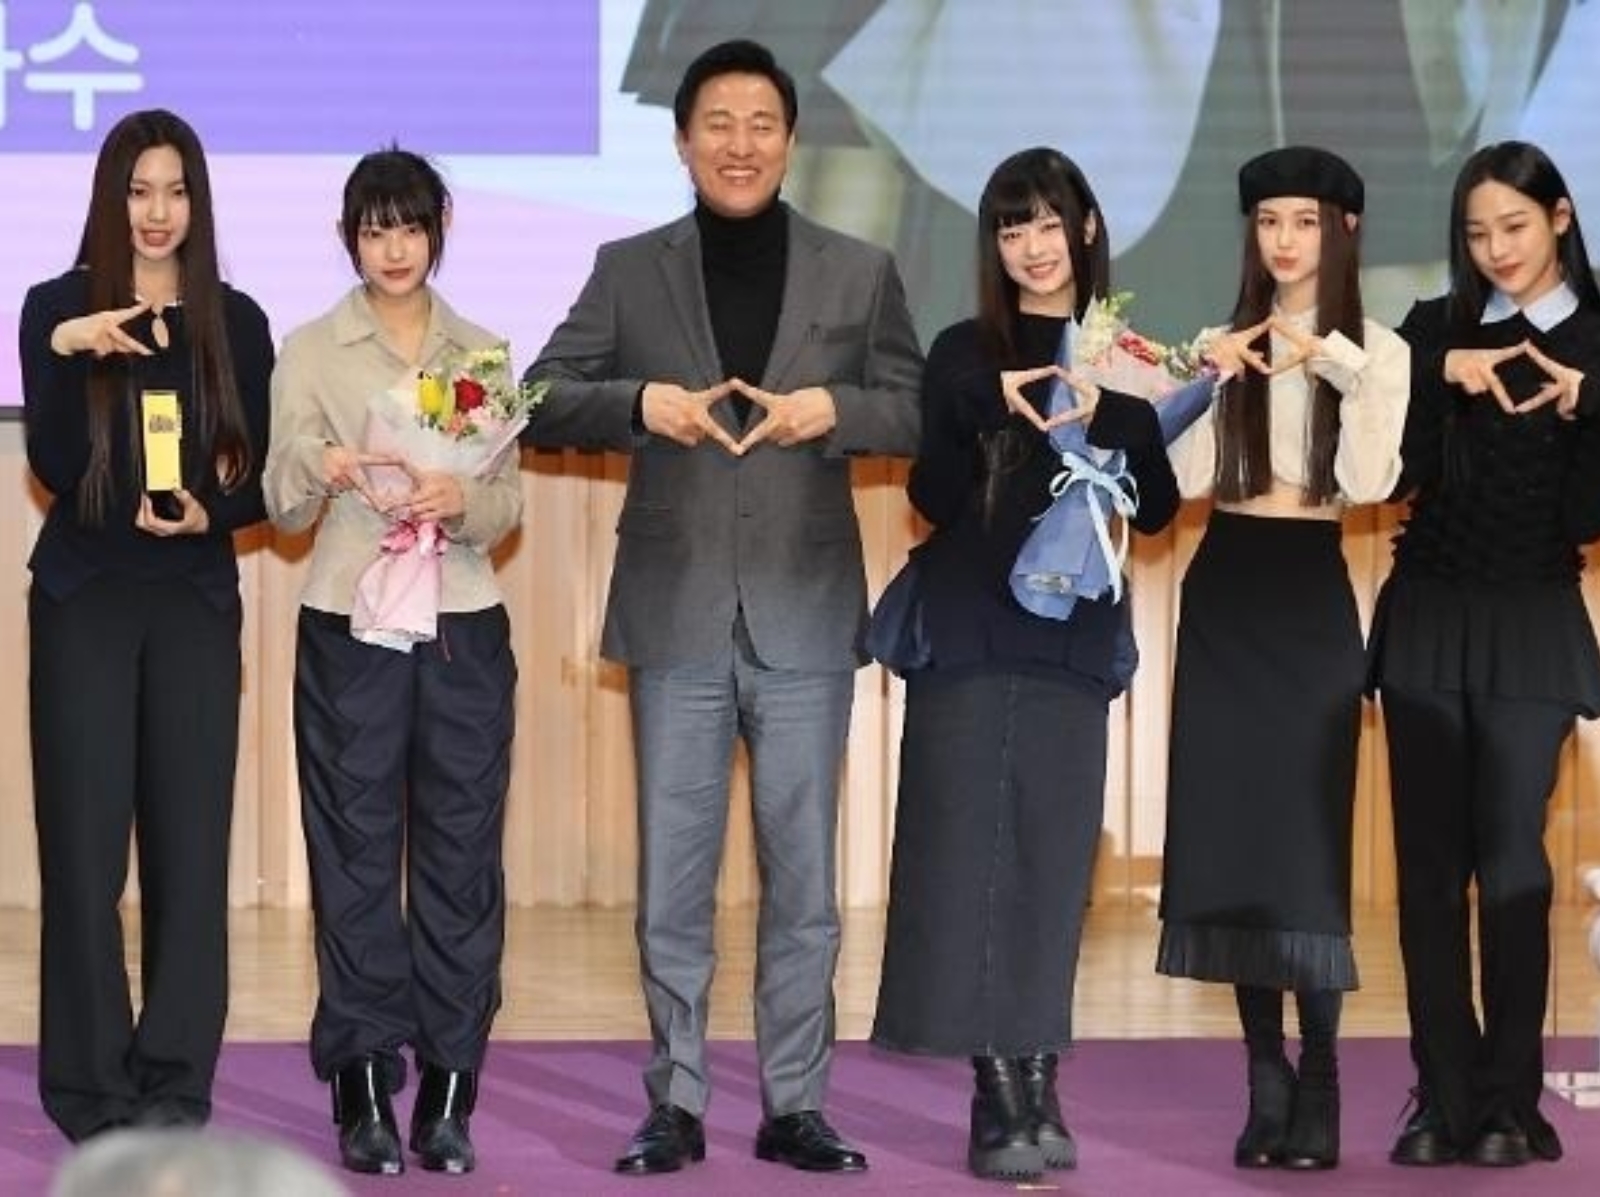 NewJeans 升格成為「首爾宣傳大使」！火紅程度將超越 BLACKPINK？